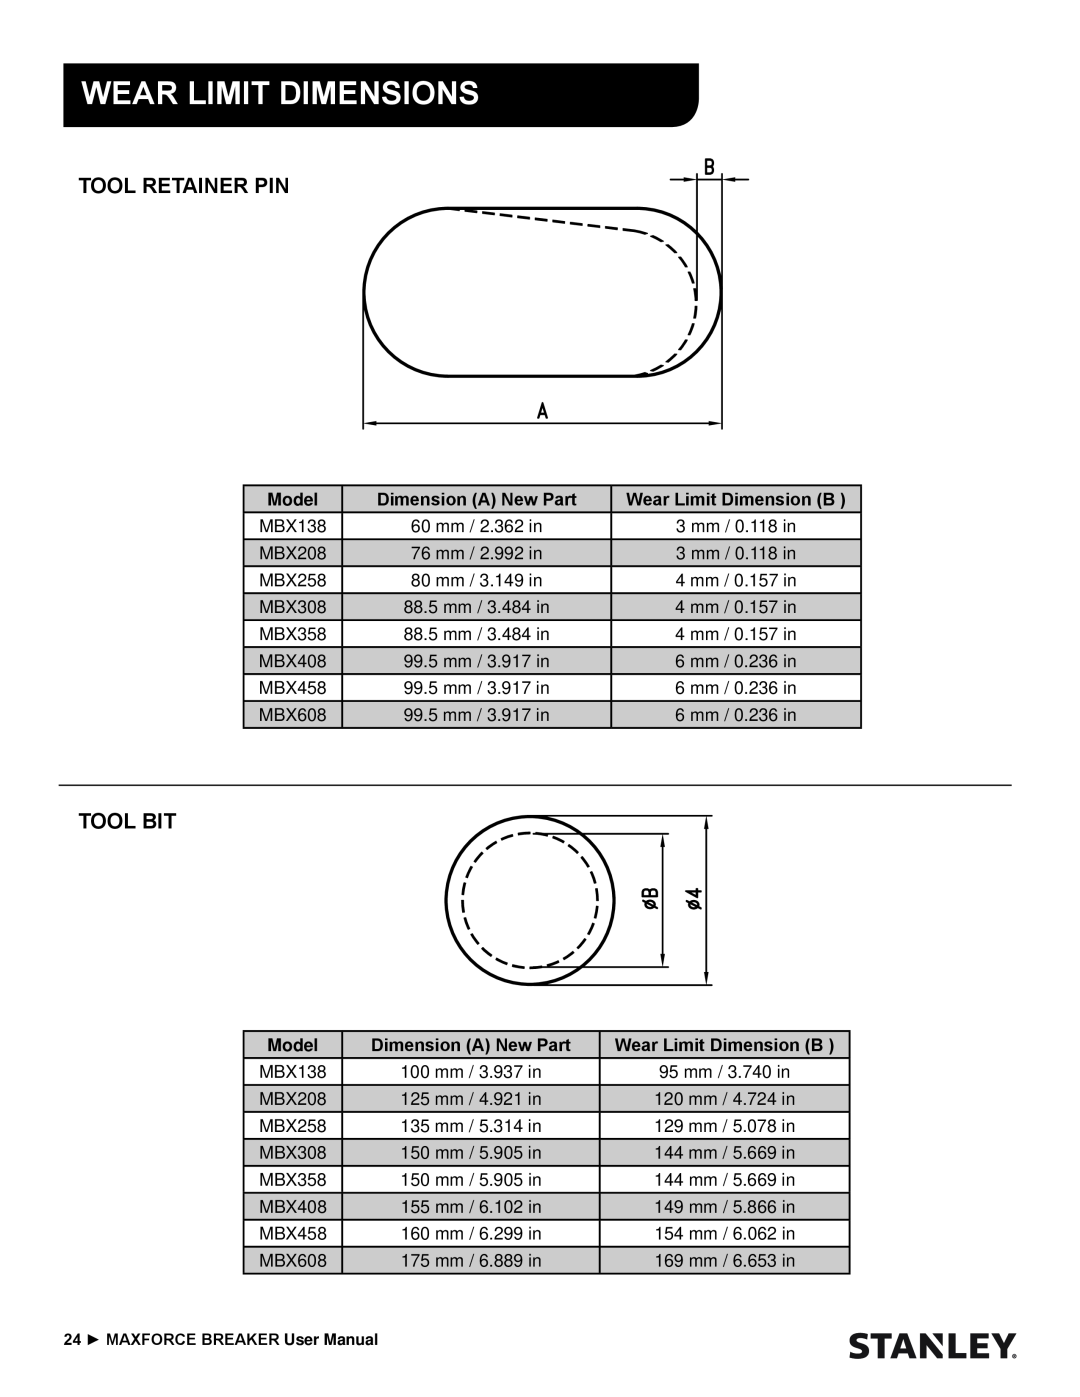 Stanley Black & Decker MBX138 thru MBX608 Tool Retainer Pin, Tool Bit, Wear Limit Dimensions, Model, Dimension A New Part 